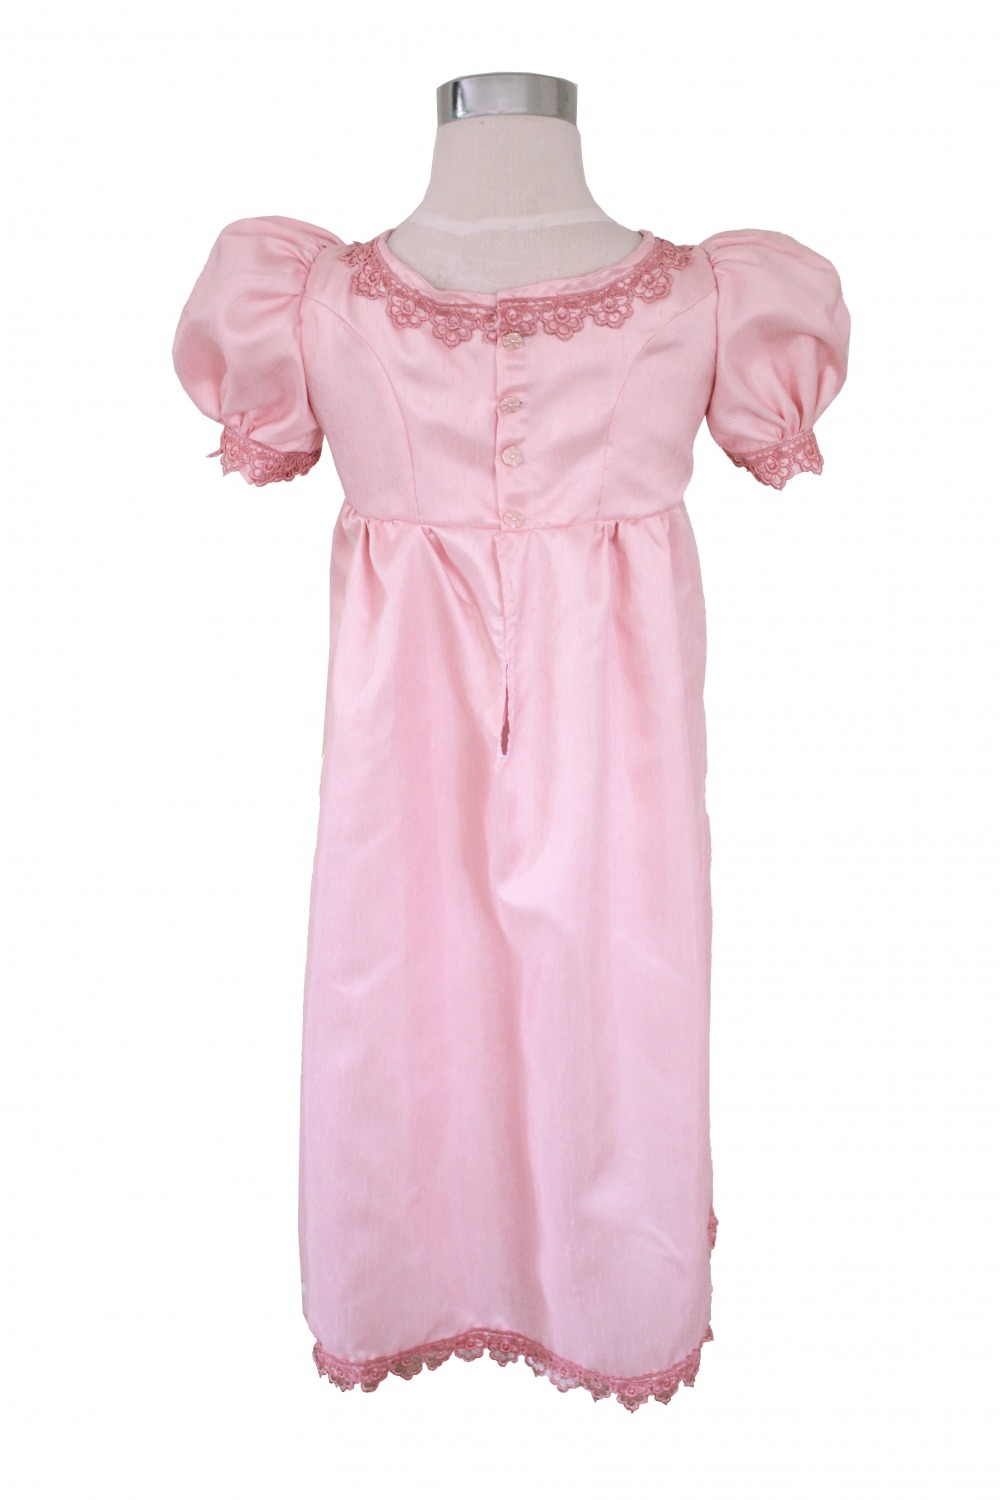 Girl's Regency Jane Austen Costume Age 4 Years  Image